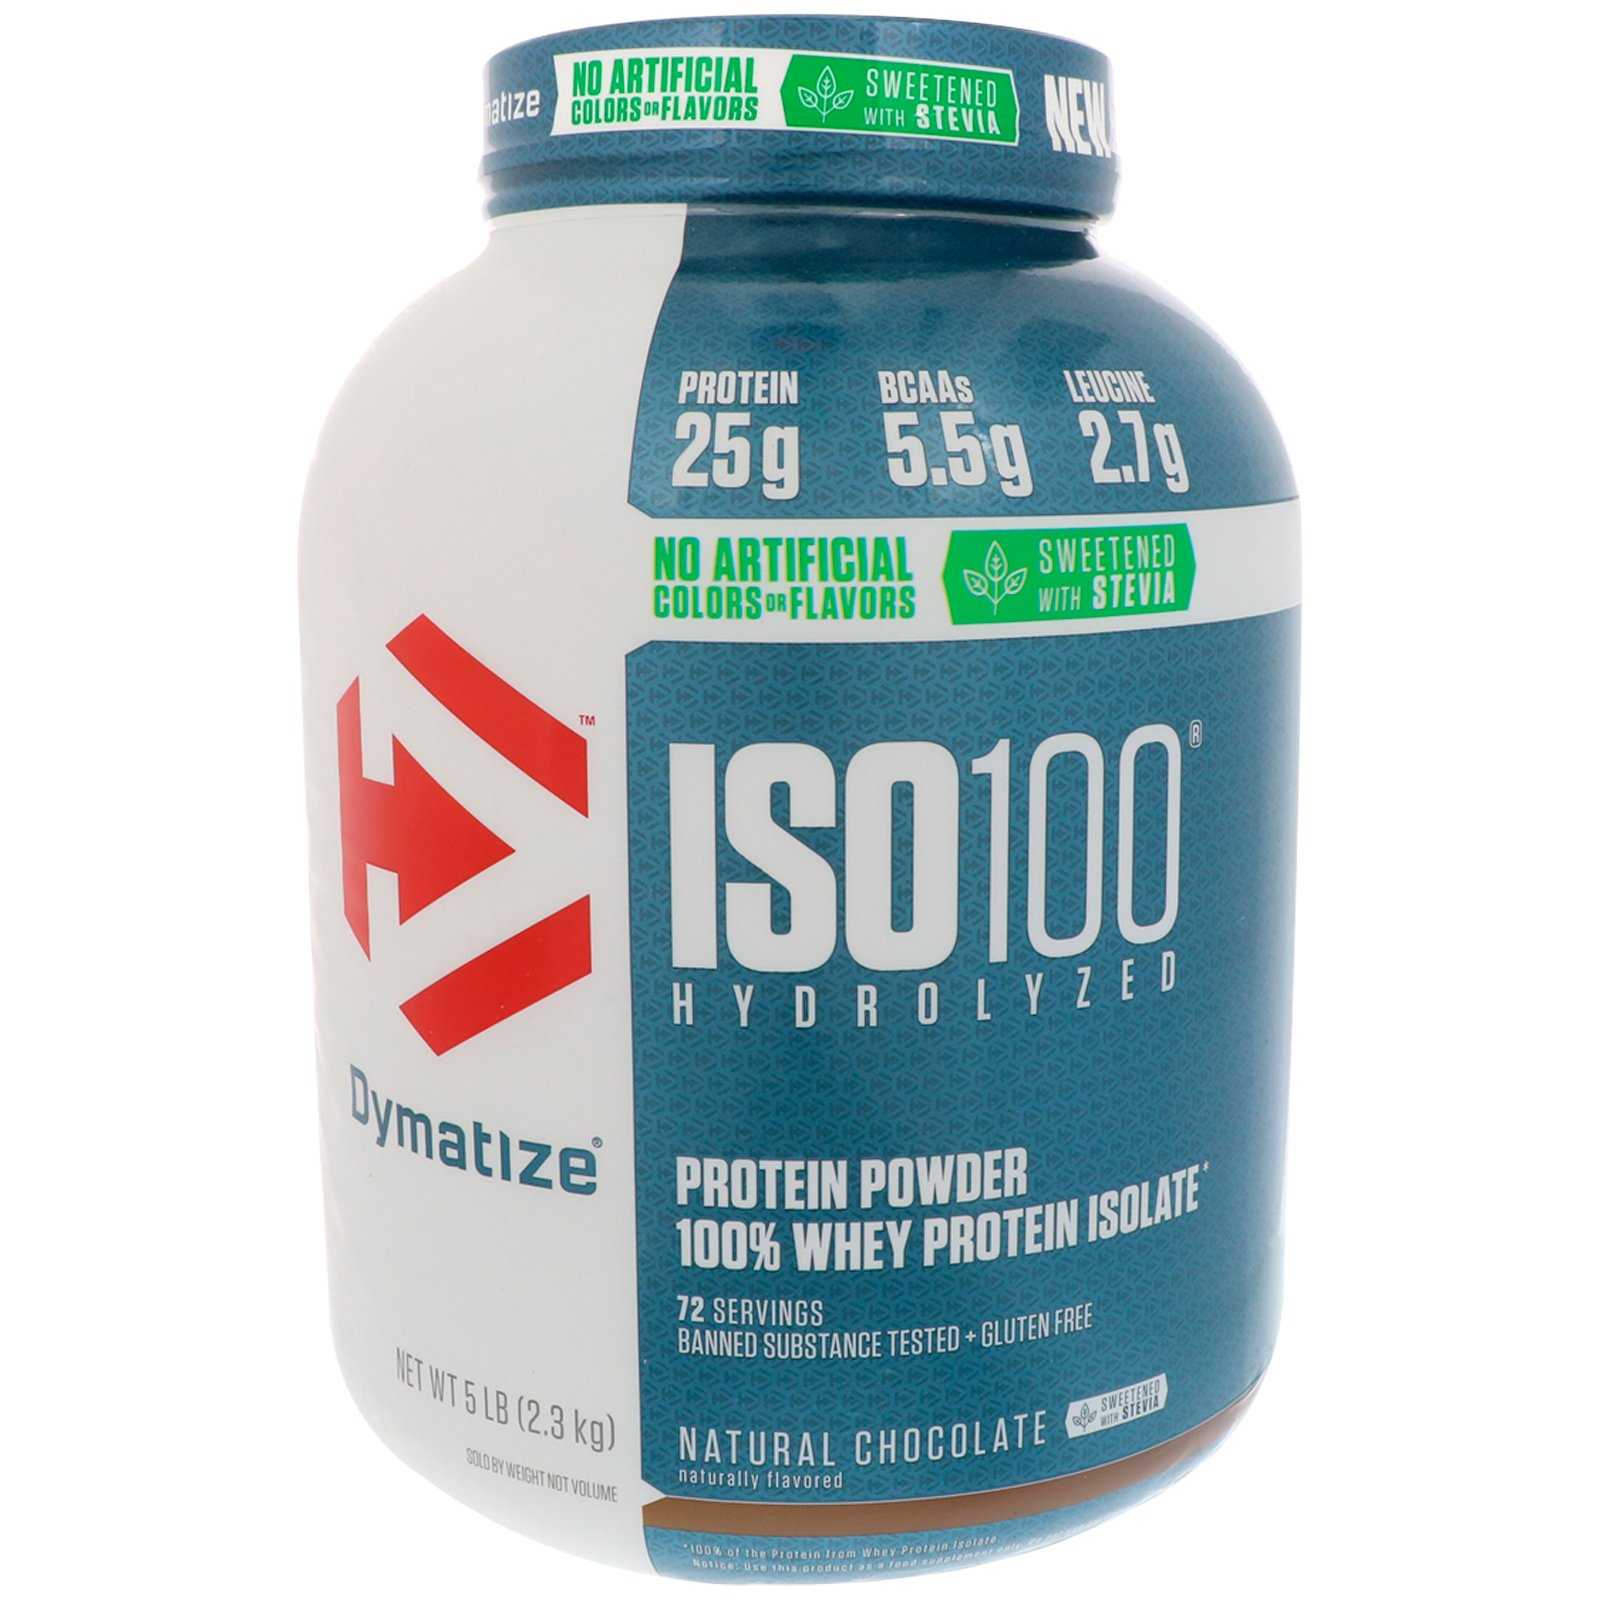 Протеин c и s. Протеин Dymatize ISO-100. Dymatize ISO 100 hydrolyzed. ISO 100 изолят. Диматайз протеин изолят.